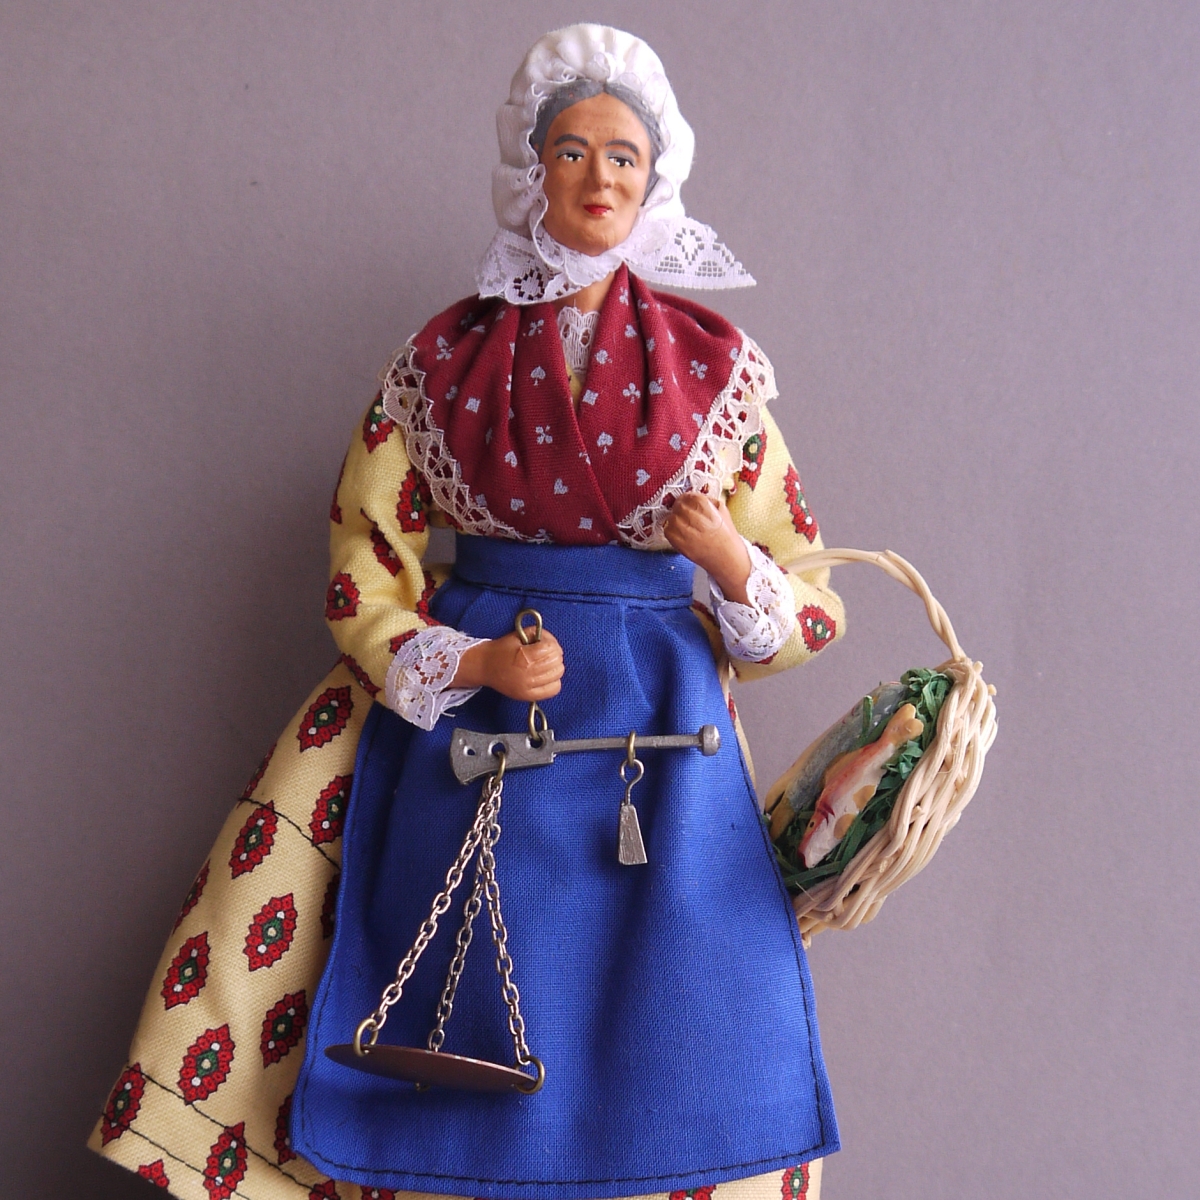 France: Provencal santon figurine: fishmonger (I) – National costume dolls